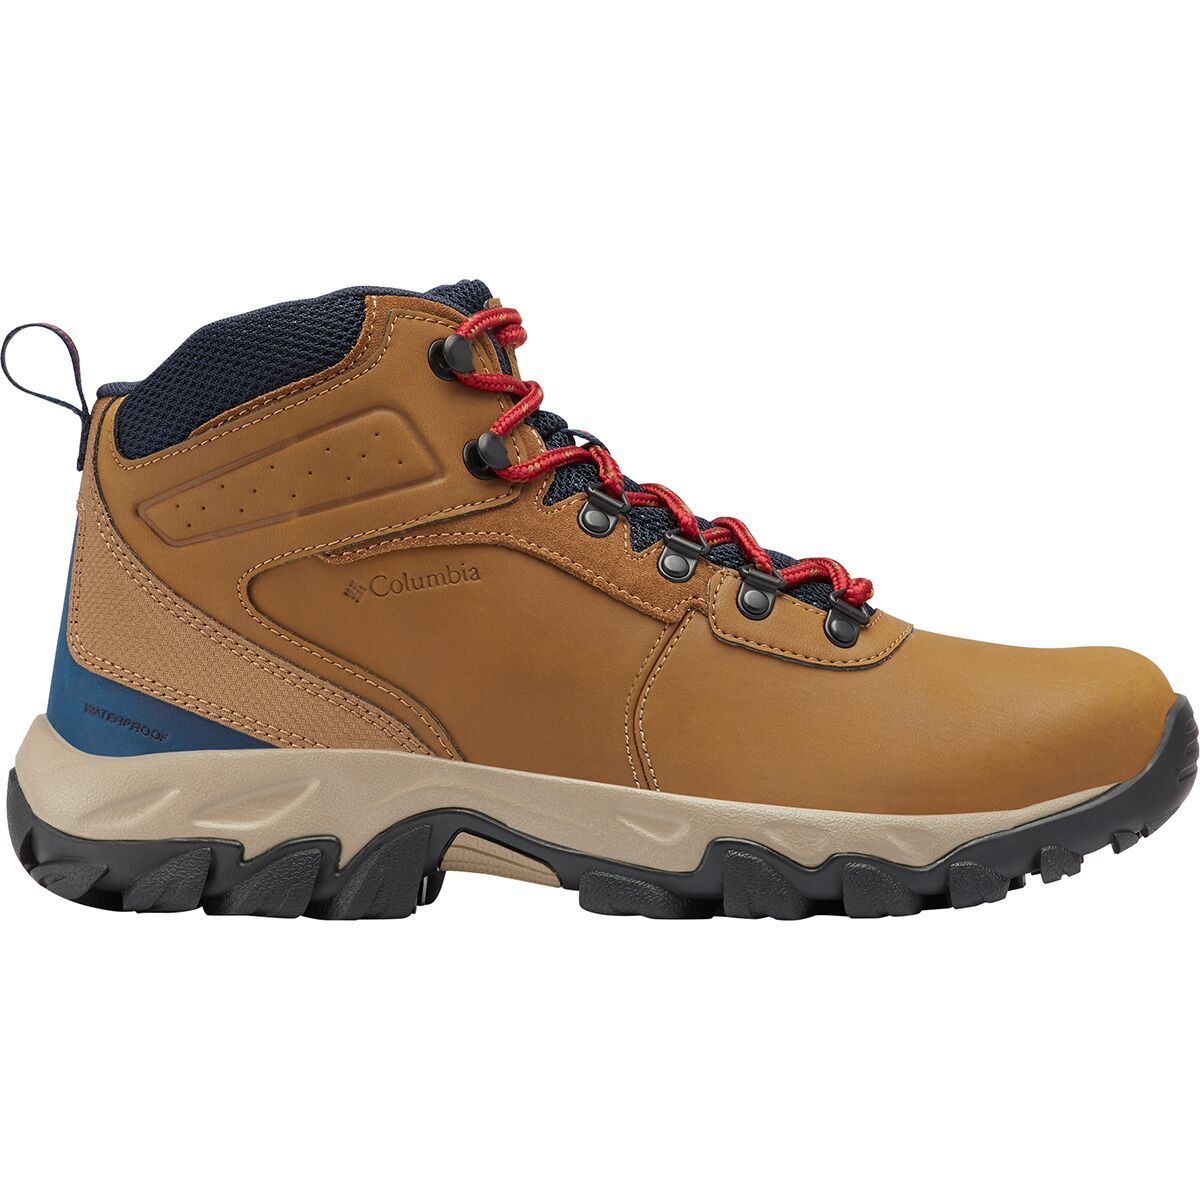 Newton Ridge Plus II Waterproof Hiking Boot - Men